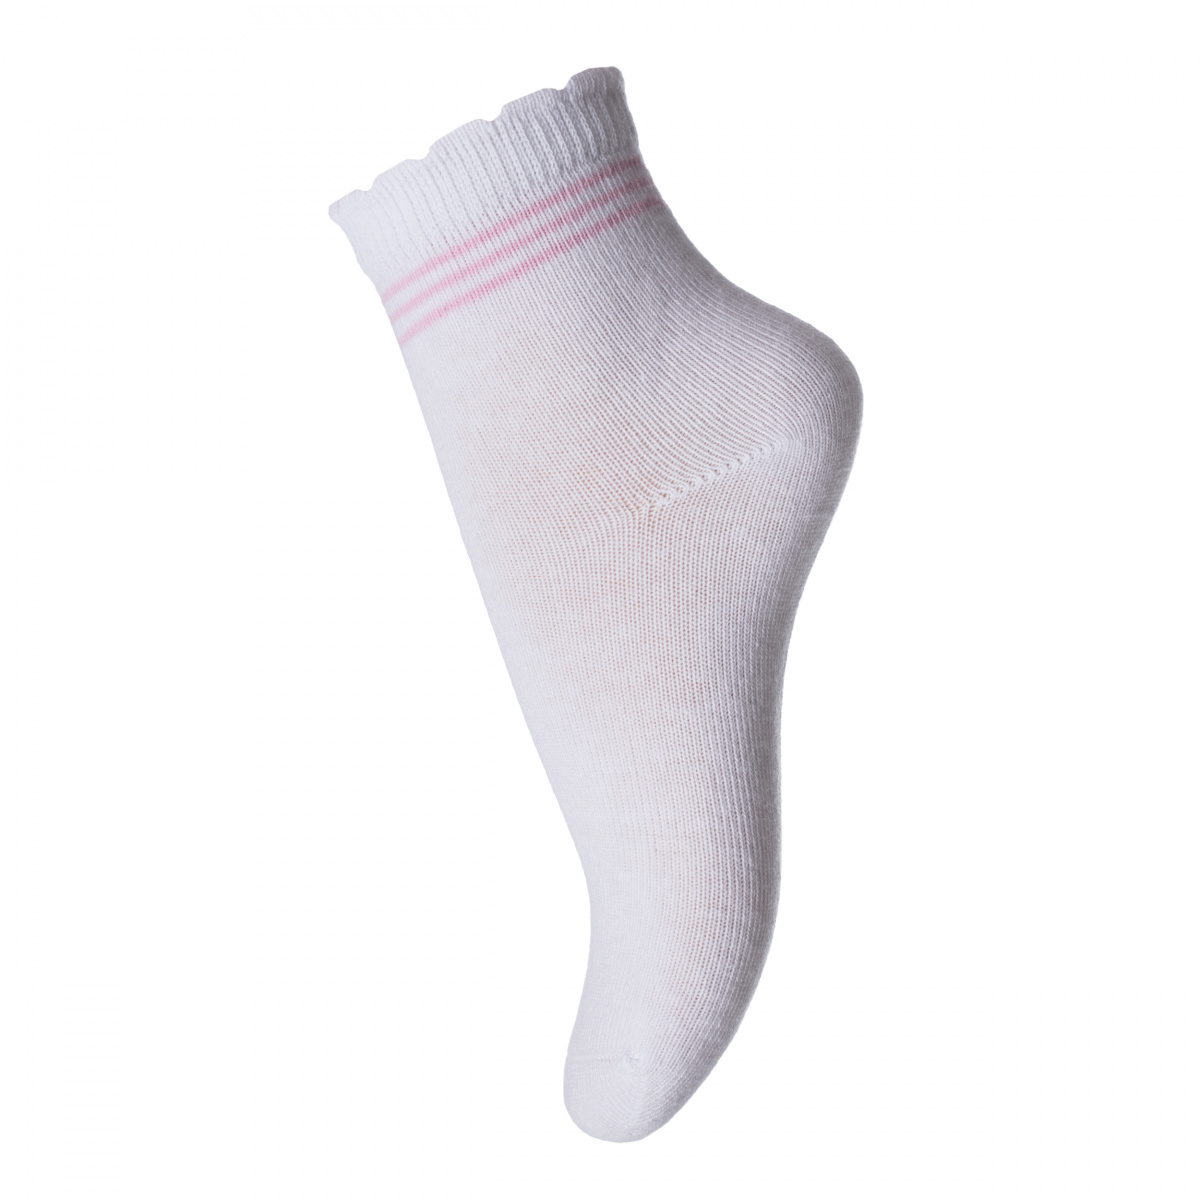 Розово белые носки. Бело розовые носки. Носки 3 пары. Спортивные носки три розовые полочки.